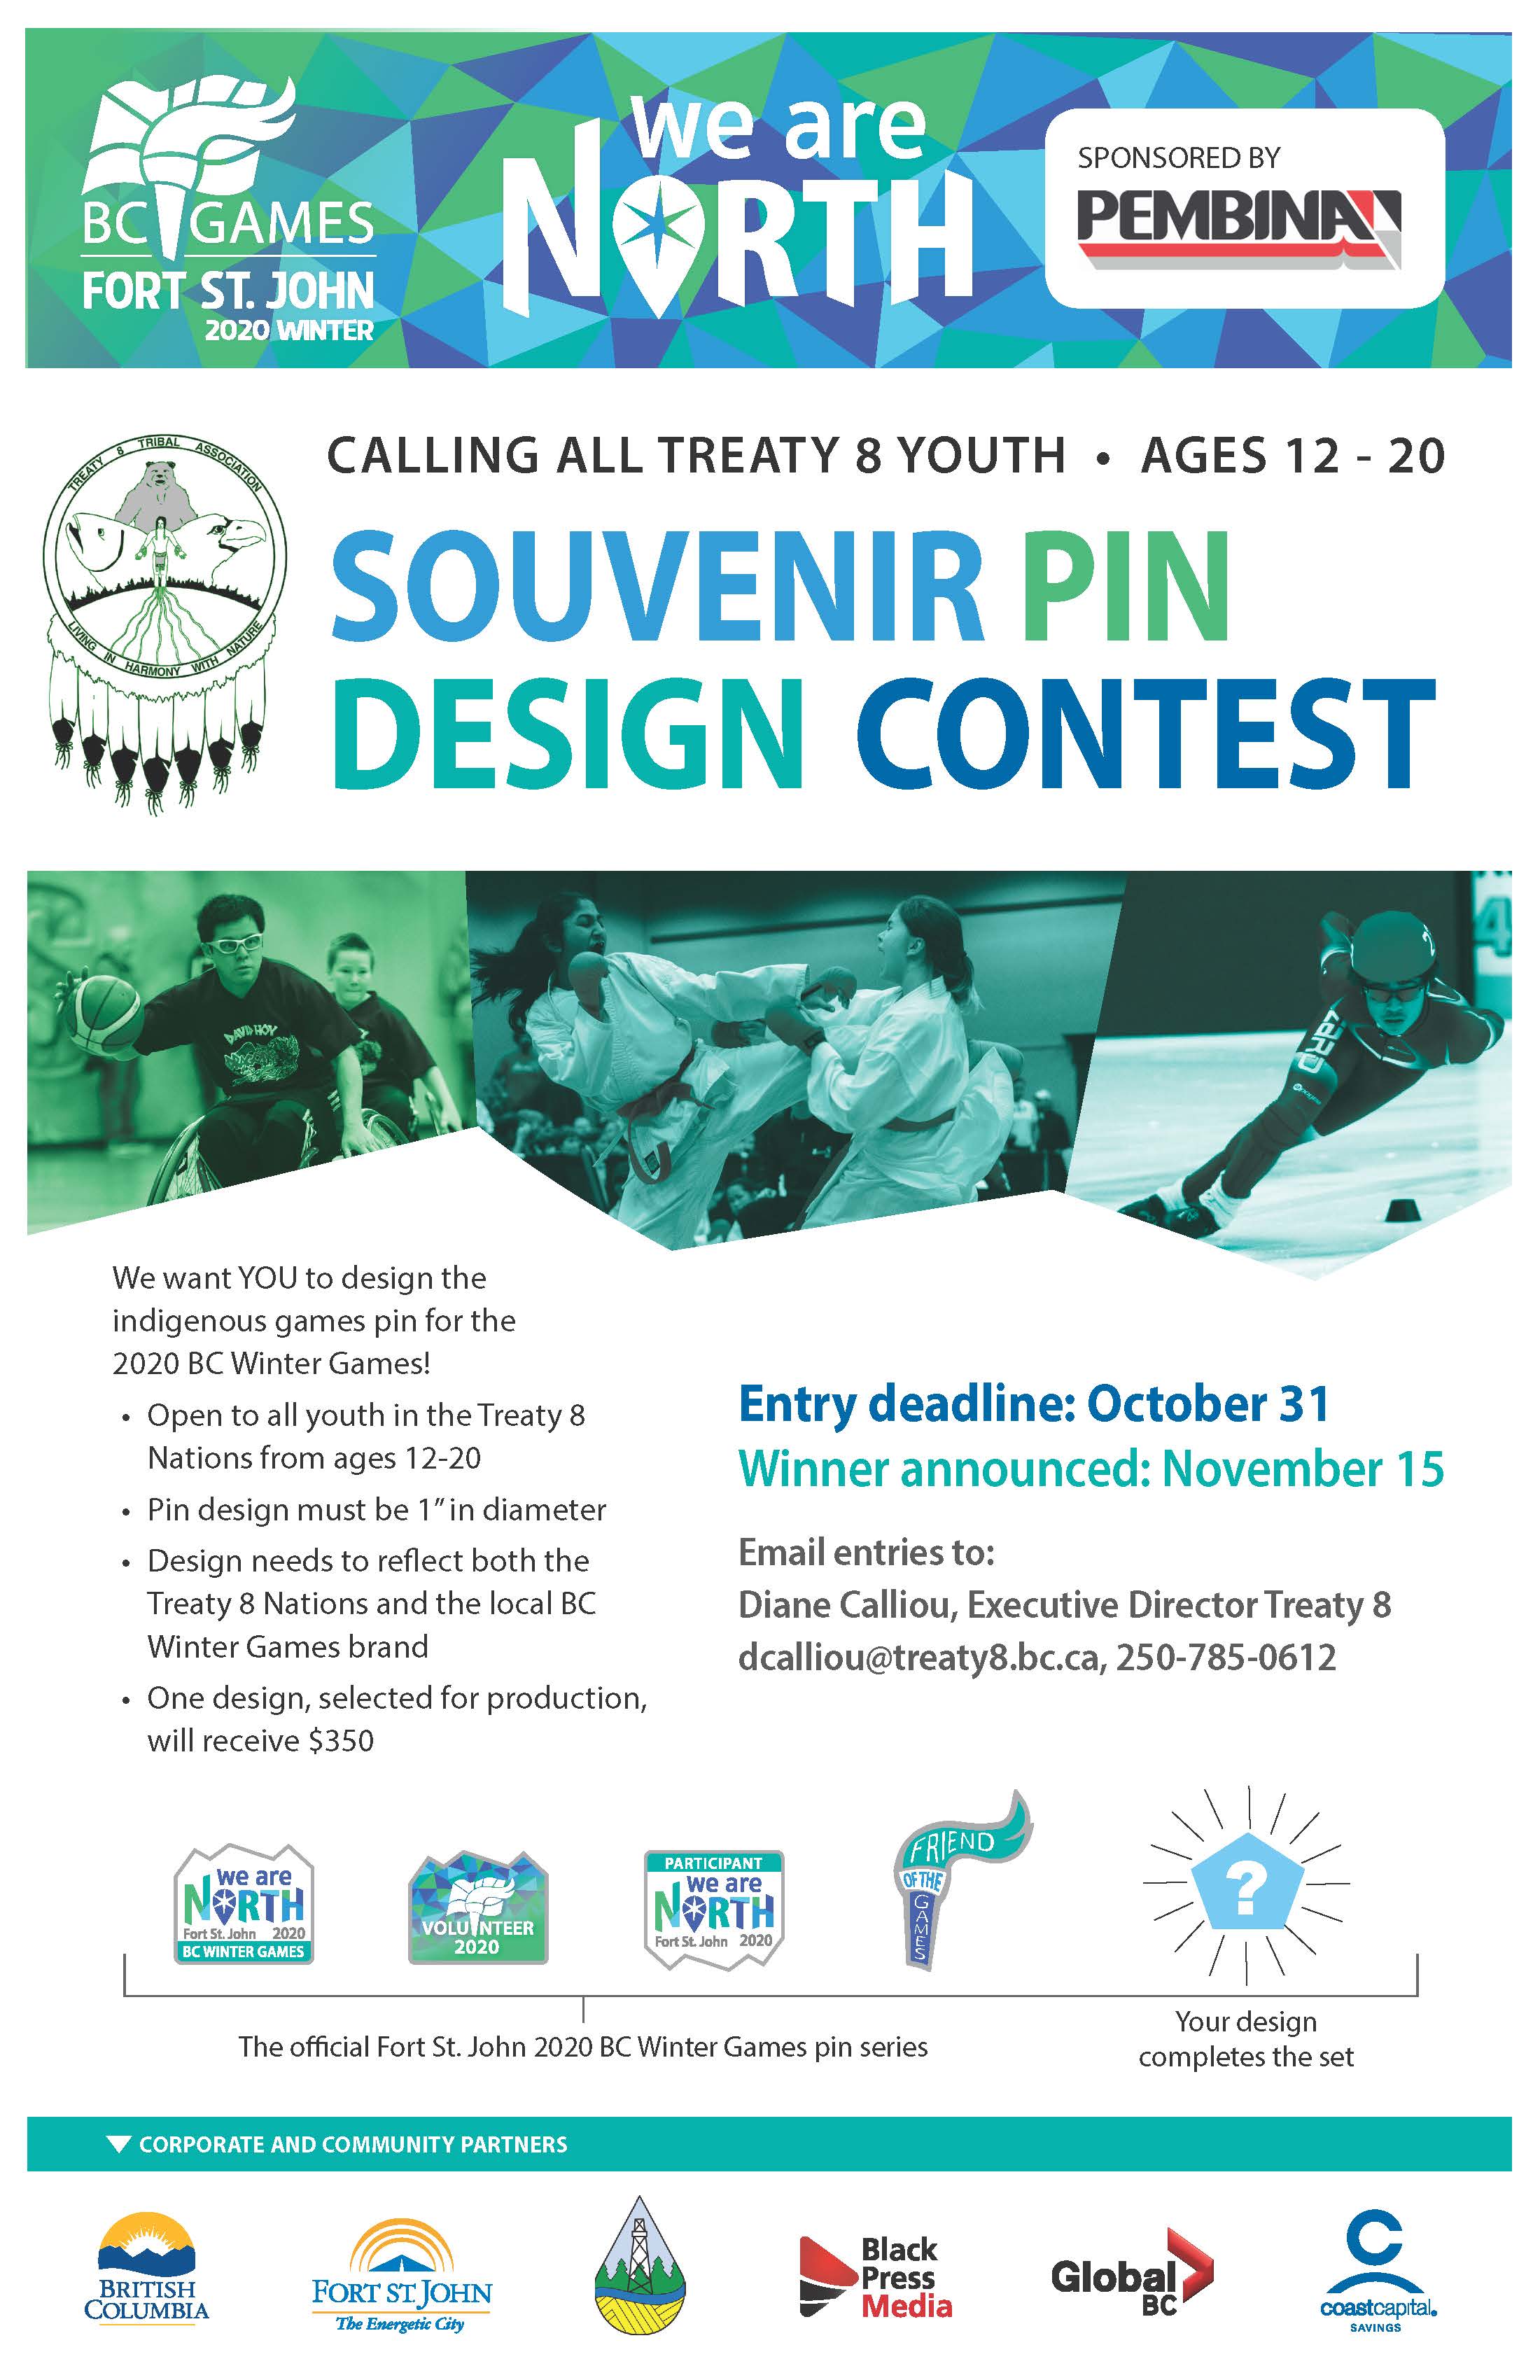 CALLING ALL TREATY 8 YOUTH - Souvenir Pin Design Contest